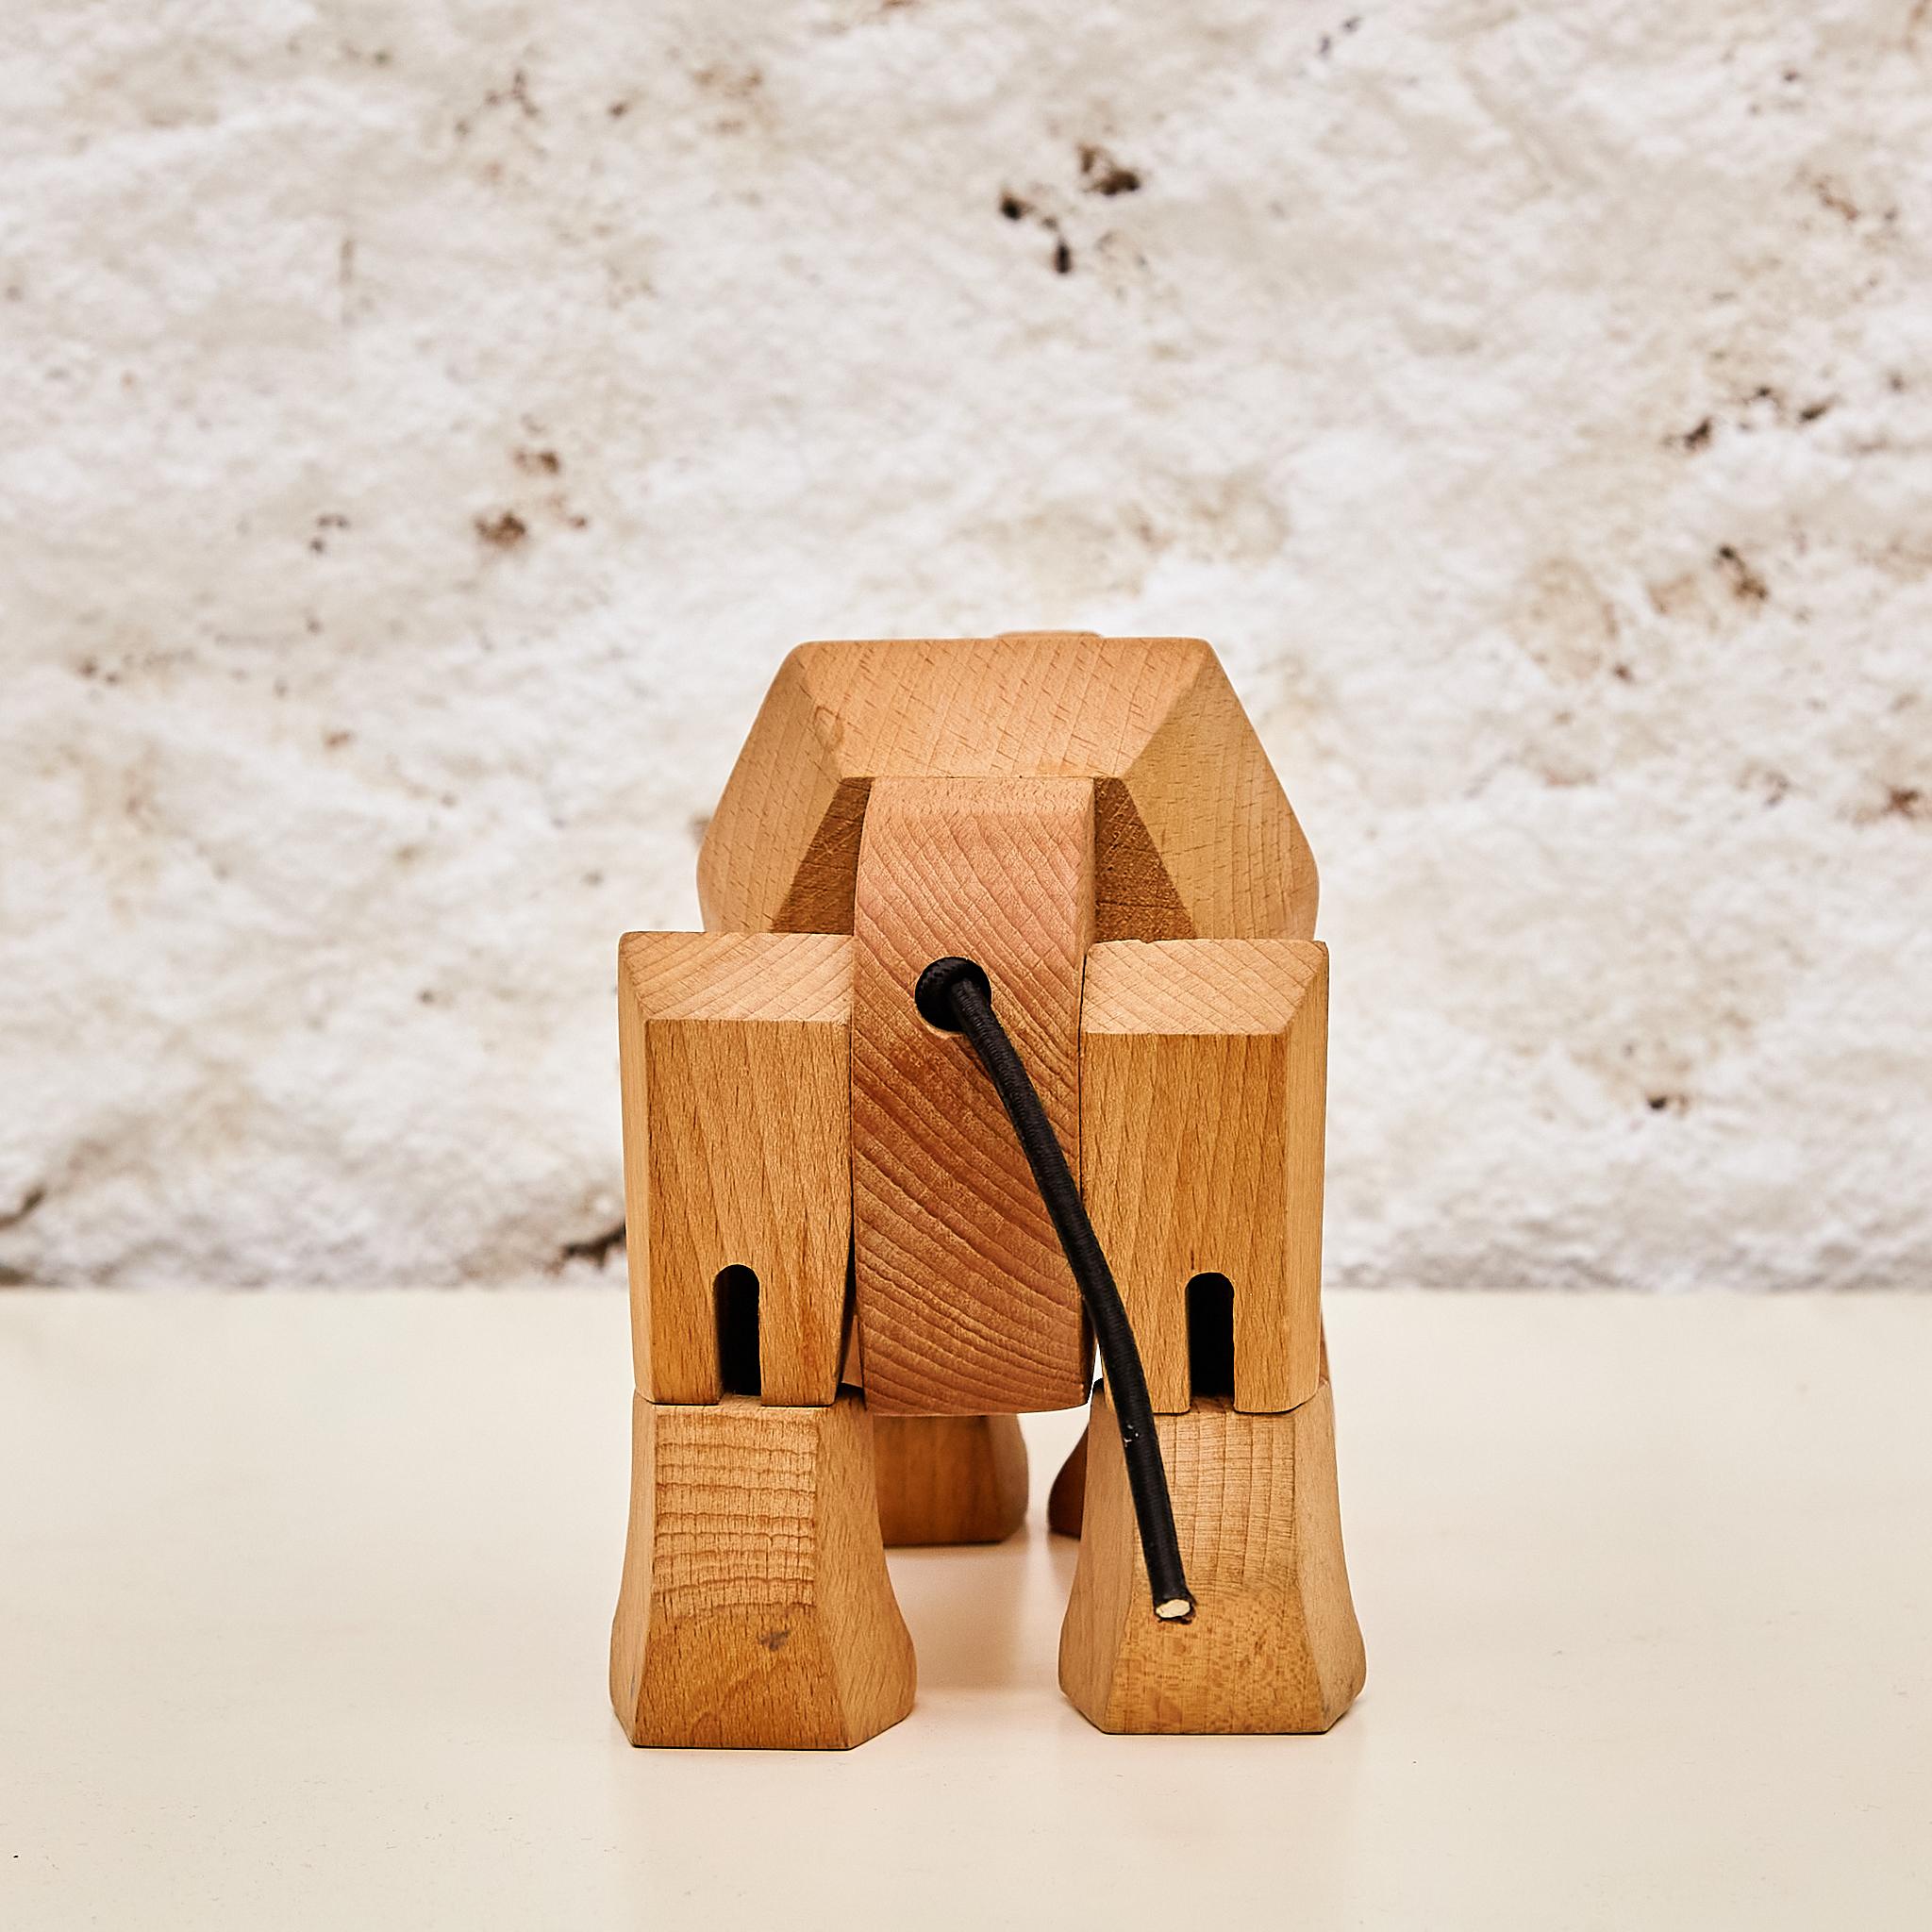 Artful Mastery: Solid Wood Rhino Sculpture 'Areaware' by David Weeks Studio 1